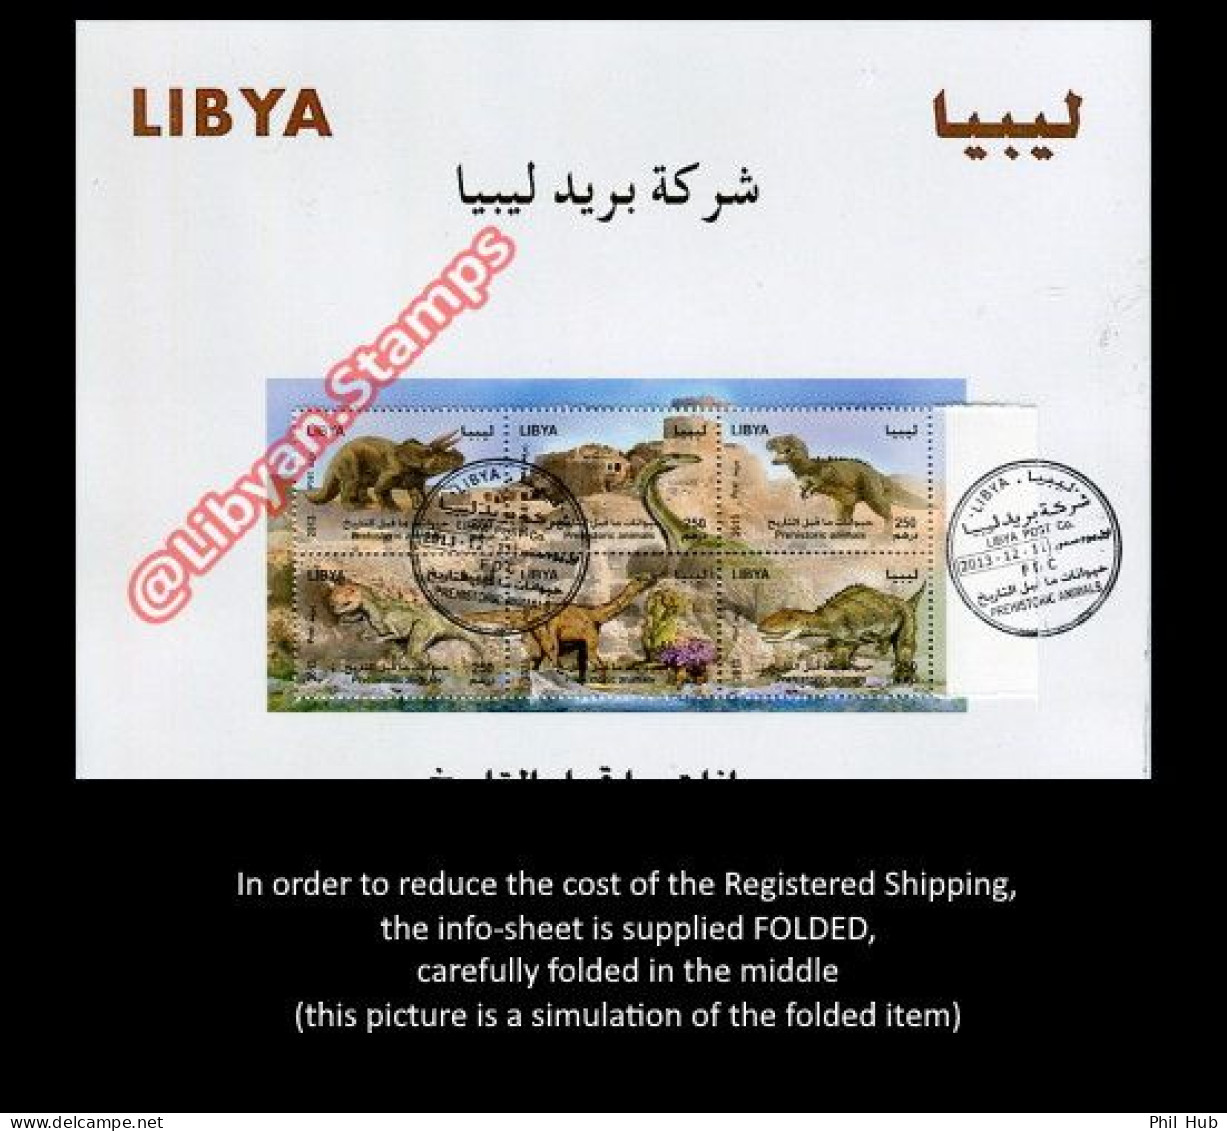 LIBYA 2013 Dinosaurs (Libya Post INFO-SHEET With Stamps PMK) SUPPLIED FOLDED - Prehistóricos